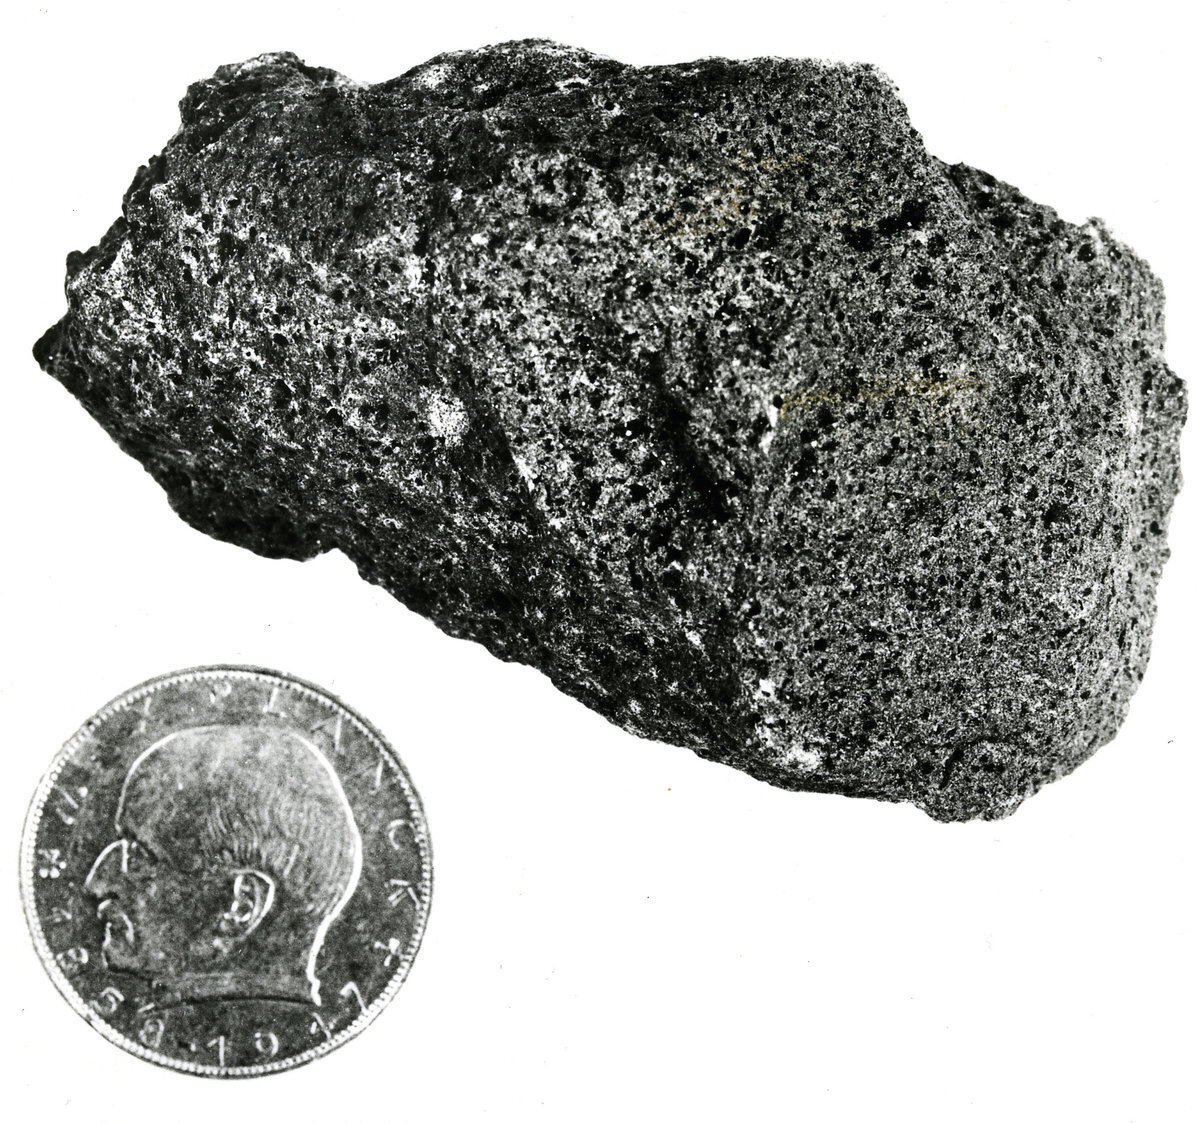 Tiny MOON ROCK lunar meteorite piece Not NASA program Not Neil Armstrong 1969 